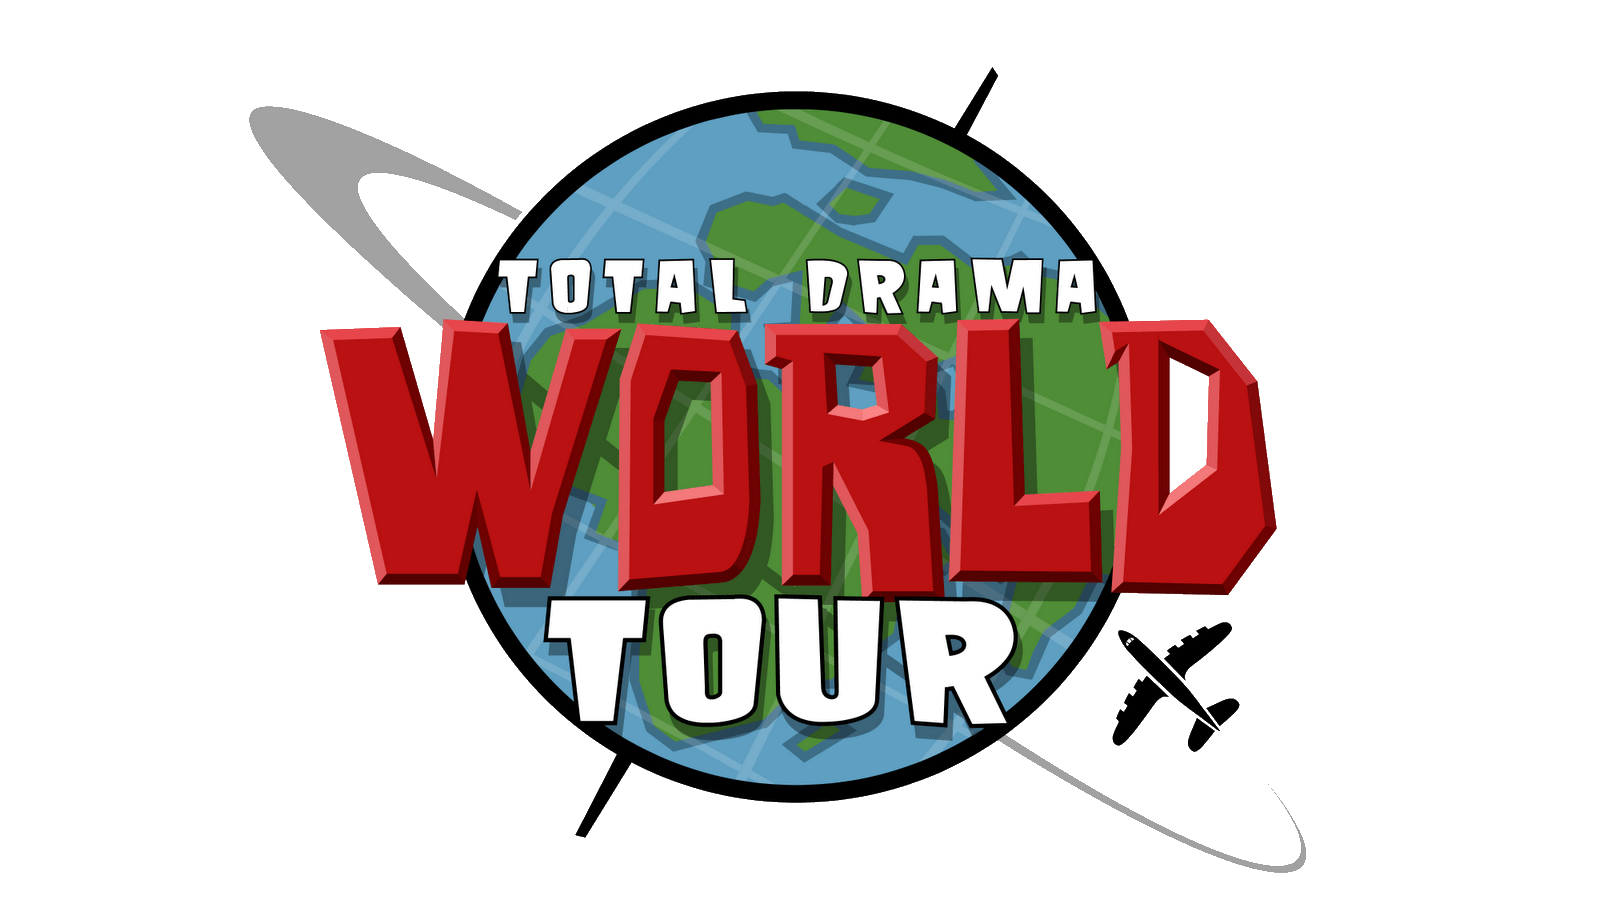 Total Drama Island Logo - Total Drama Series | Logopedia | FANDOM powered by Wikia